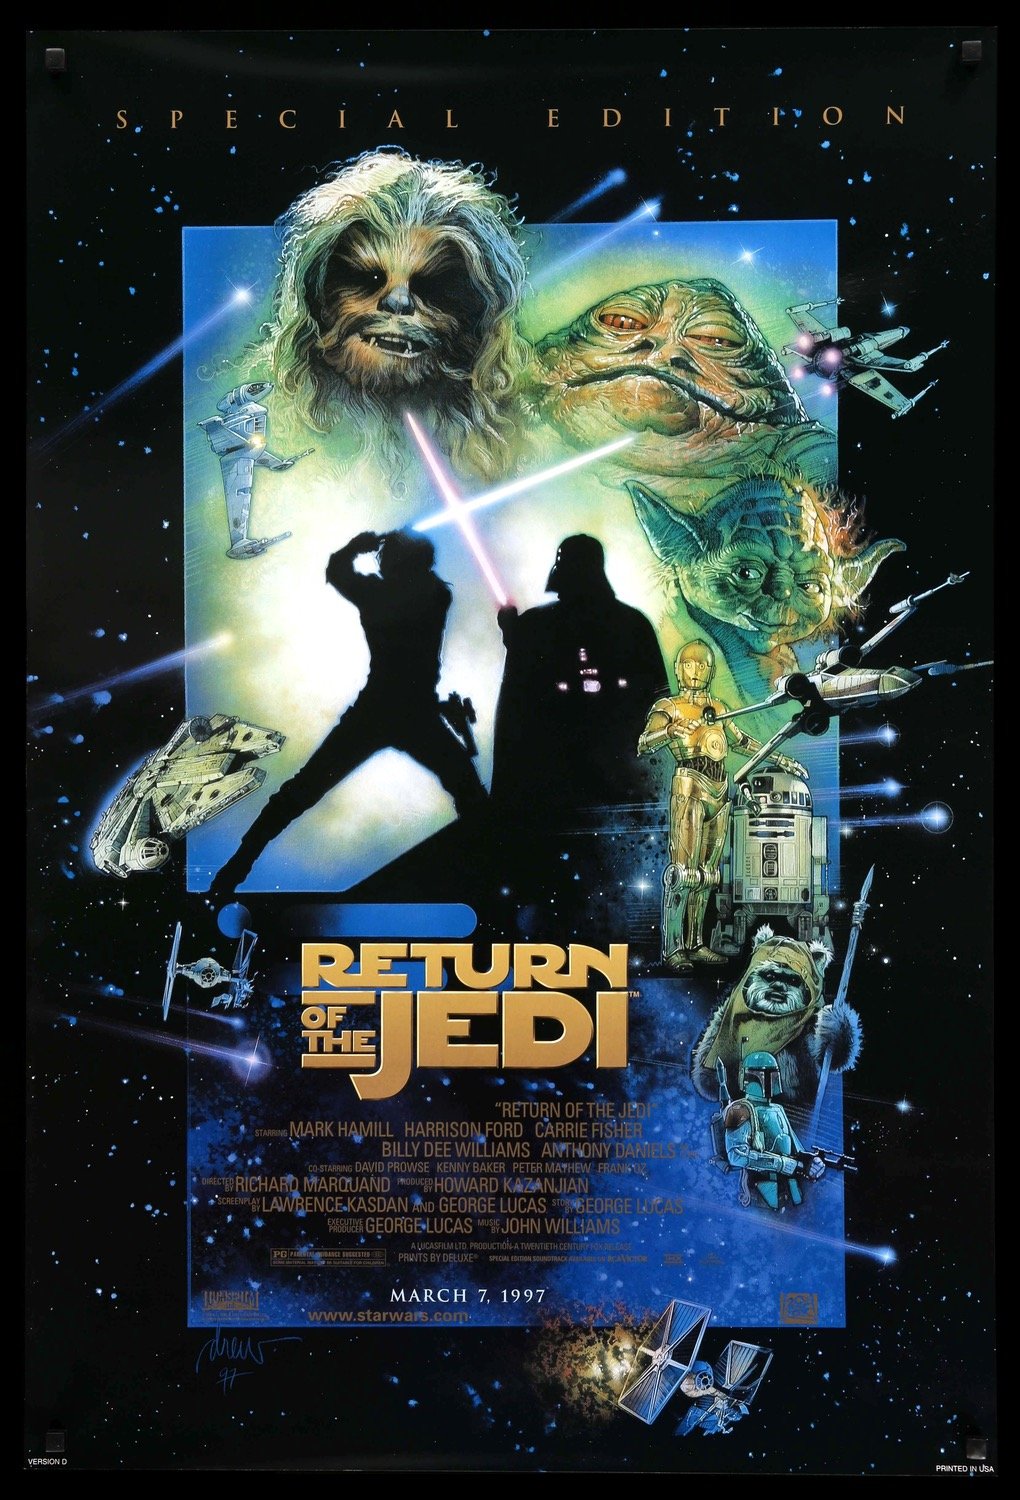 Return of the Jedi (1983) original movie poster for sale at Original Film Art